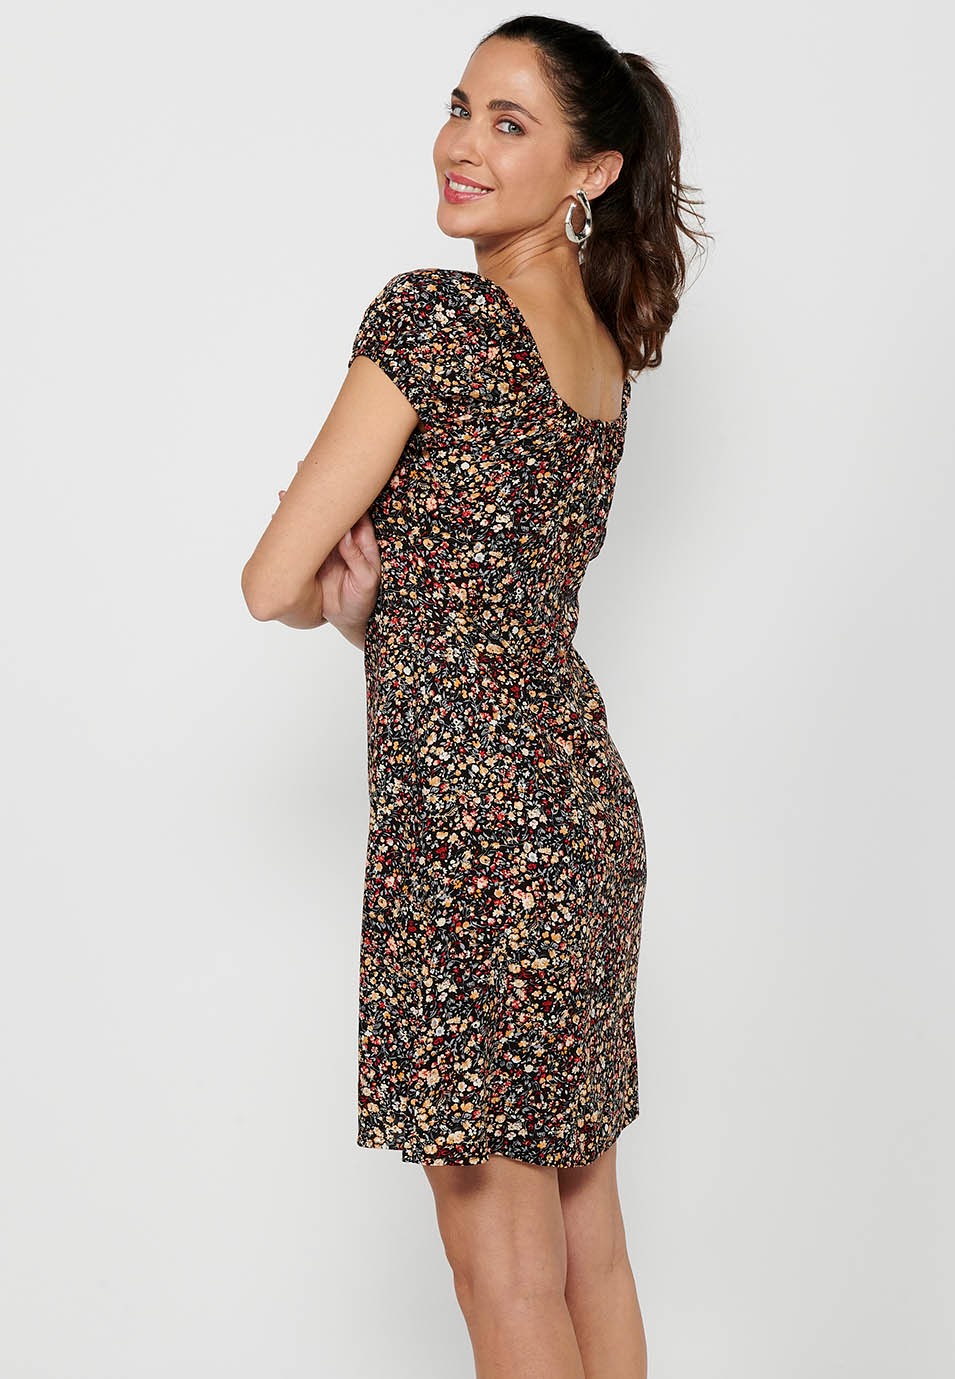 Damen-Kleid mit mehrfarbigem Blumendruck, kurzen Ärmeln, gerafftem Ausschnitt und Reißverschluss hinten 6